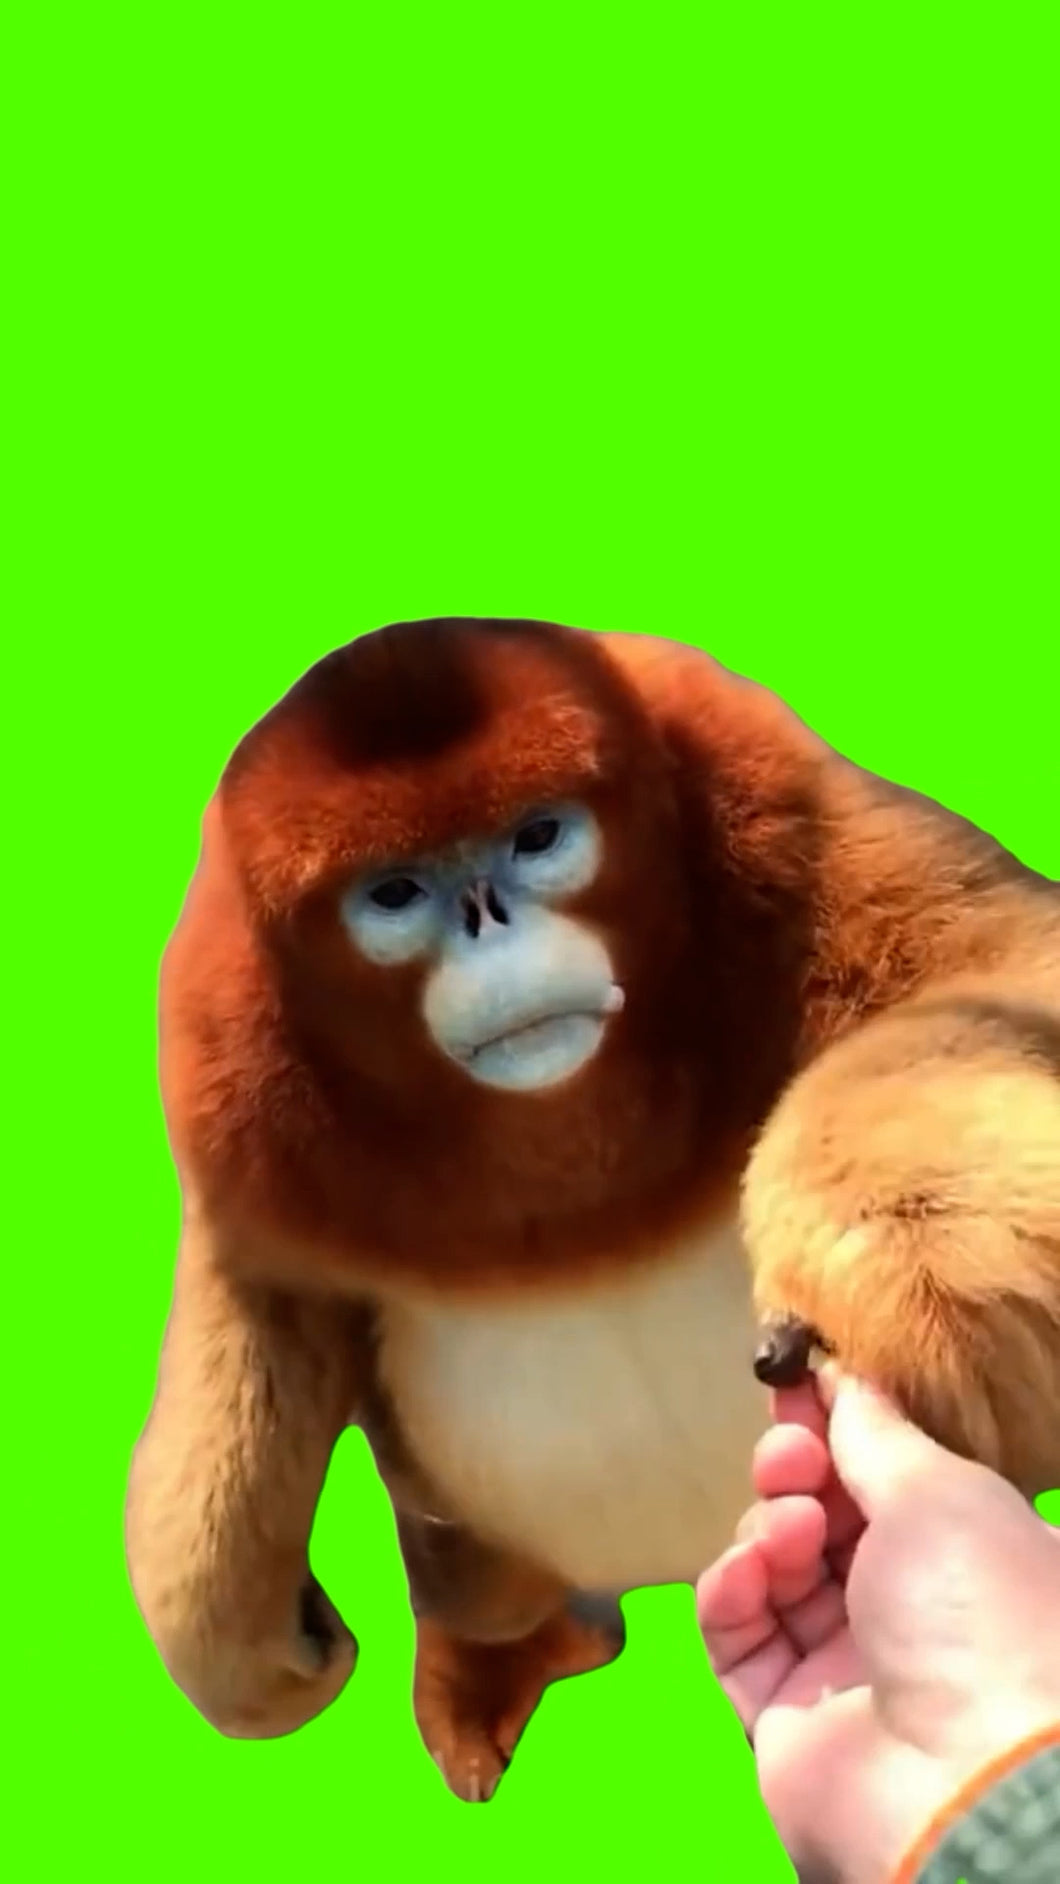 Golden Snub Nosed Monkey Eating Berries (Green Screen)